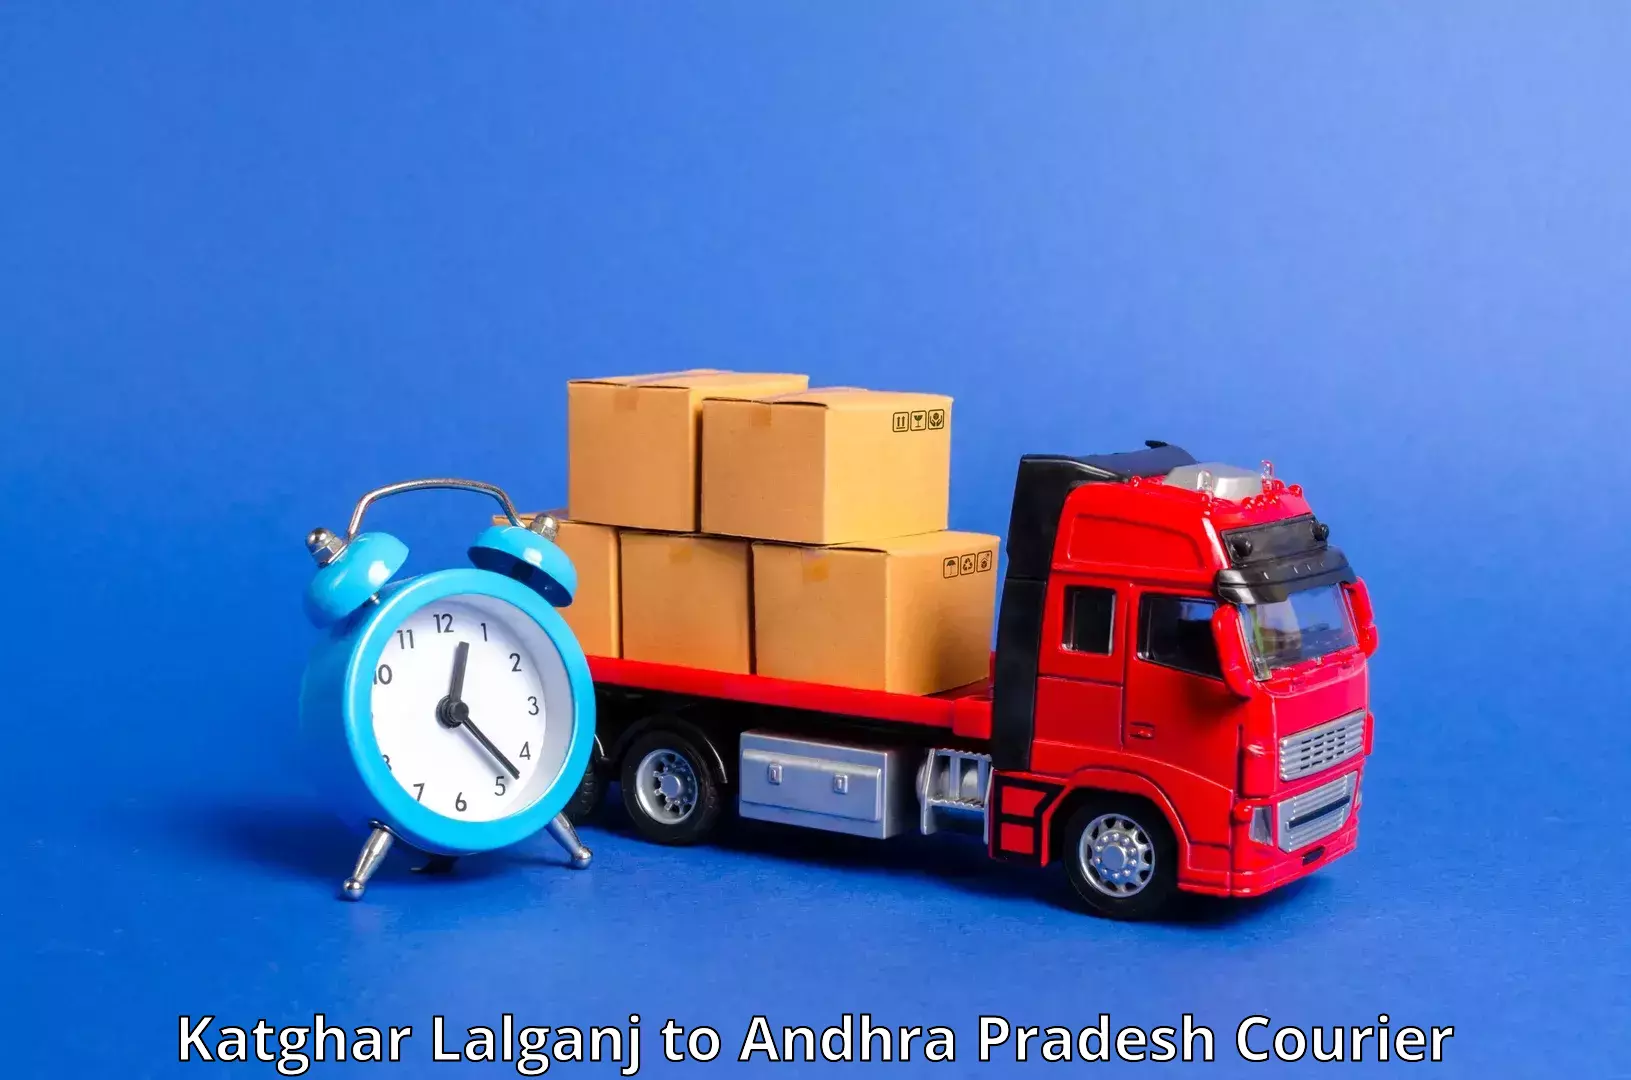 Professional courier handling Katghar Lalganj to Parvathipuram